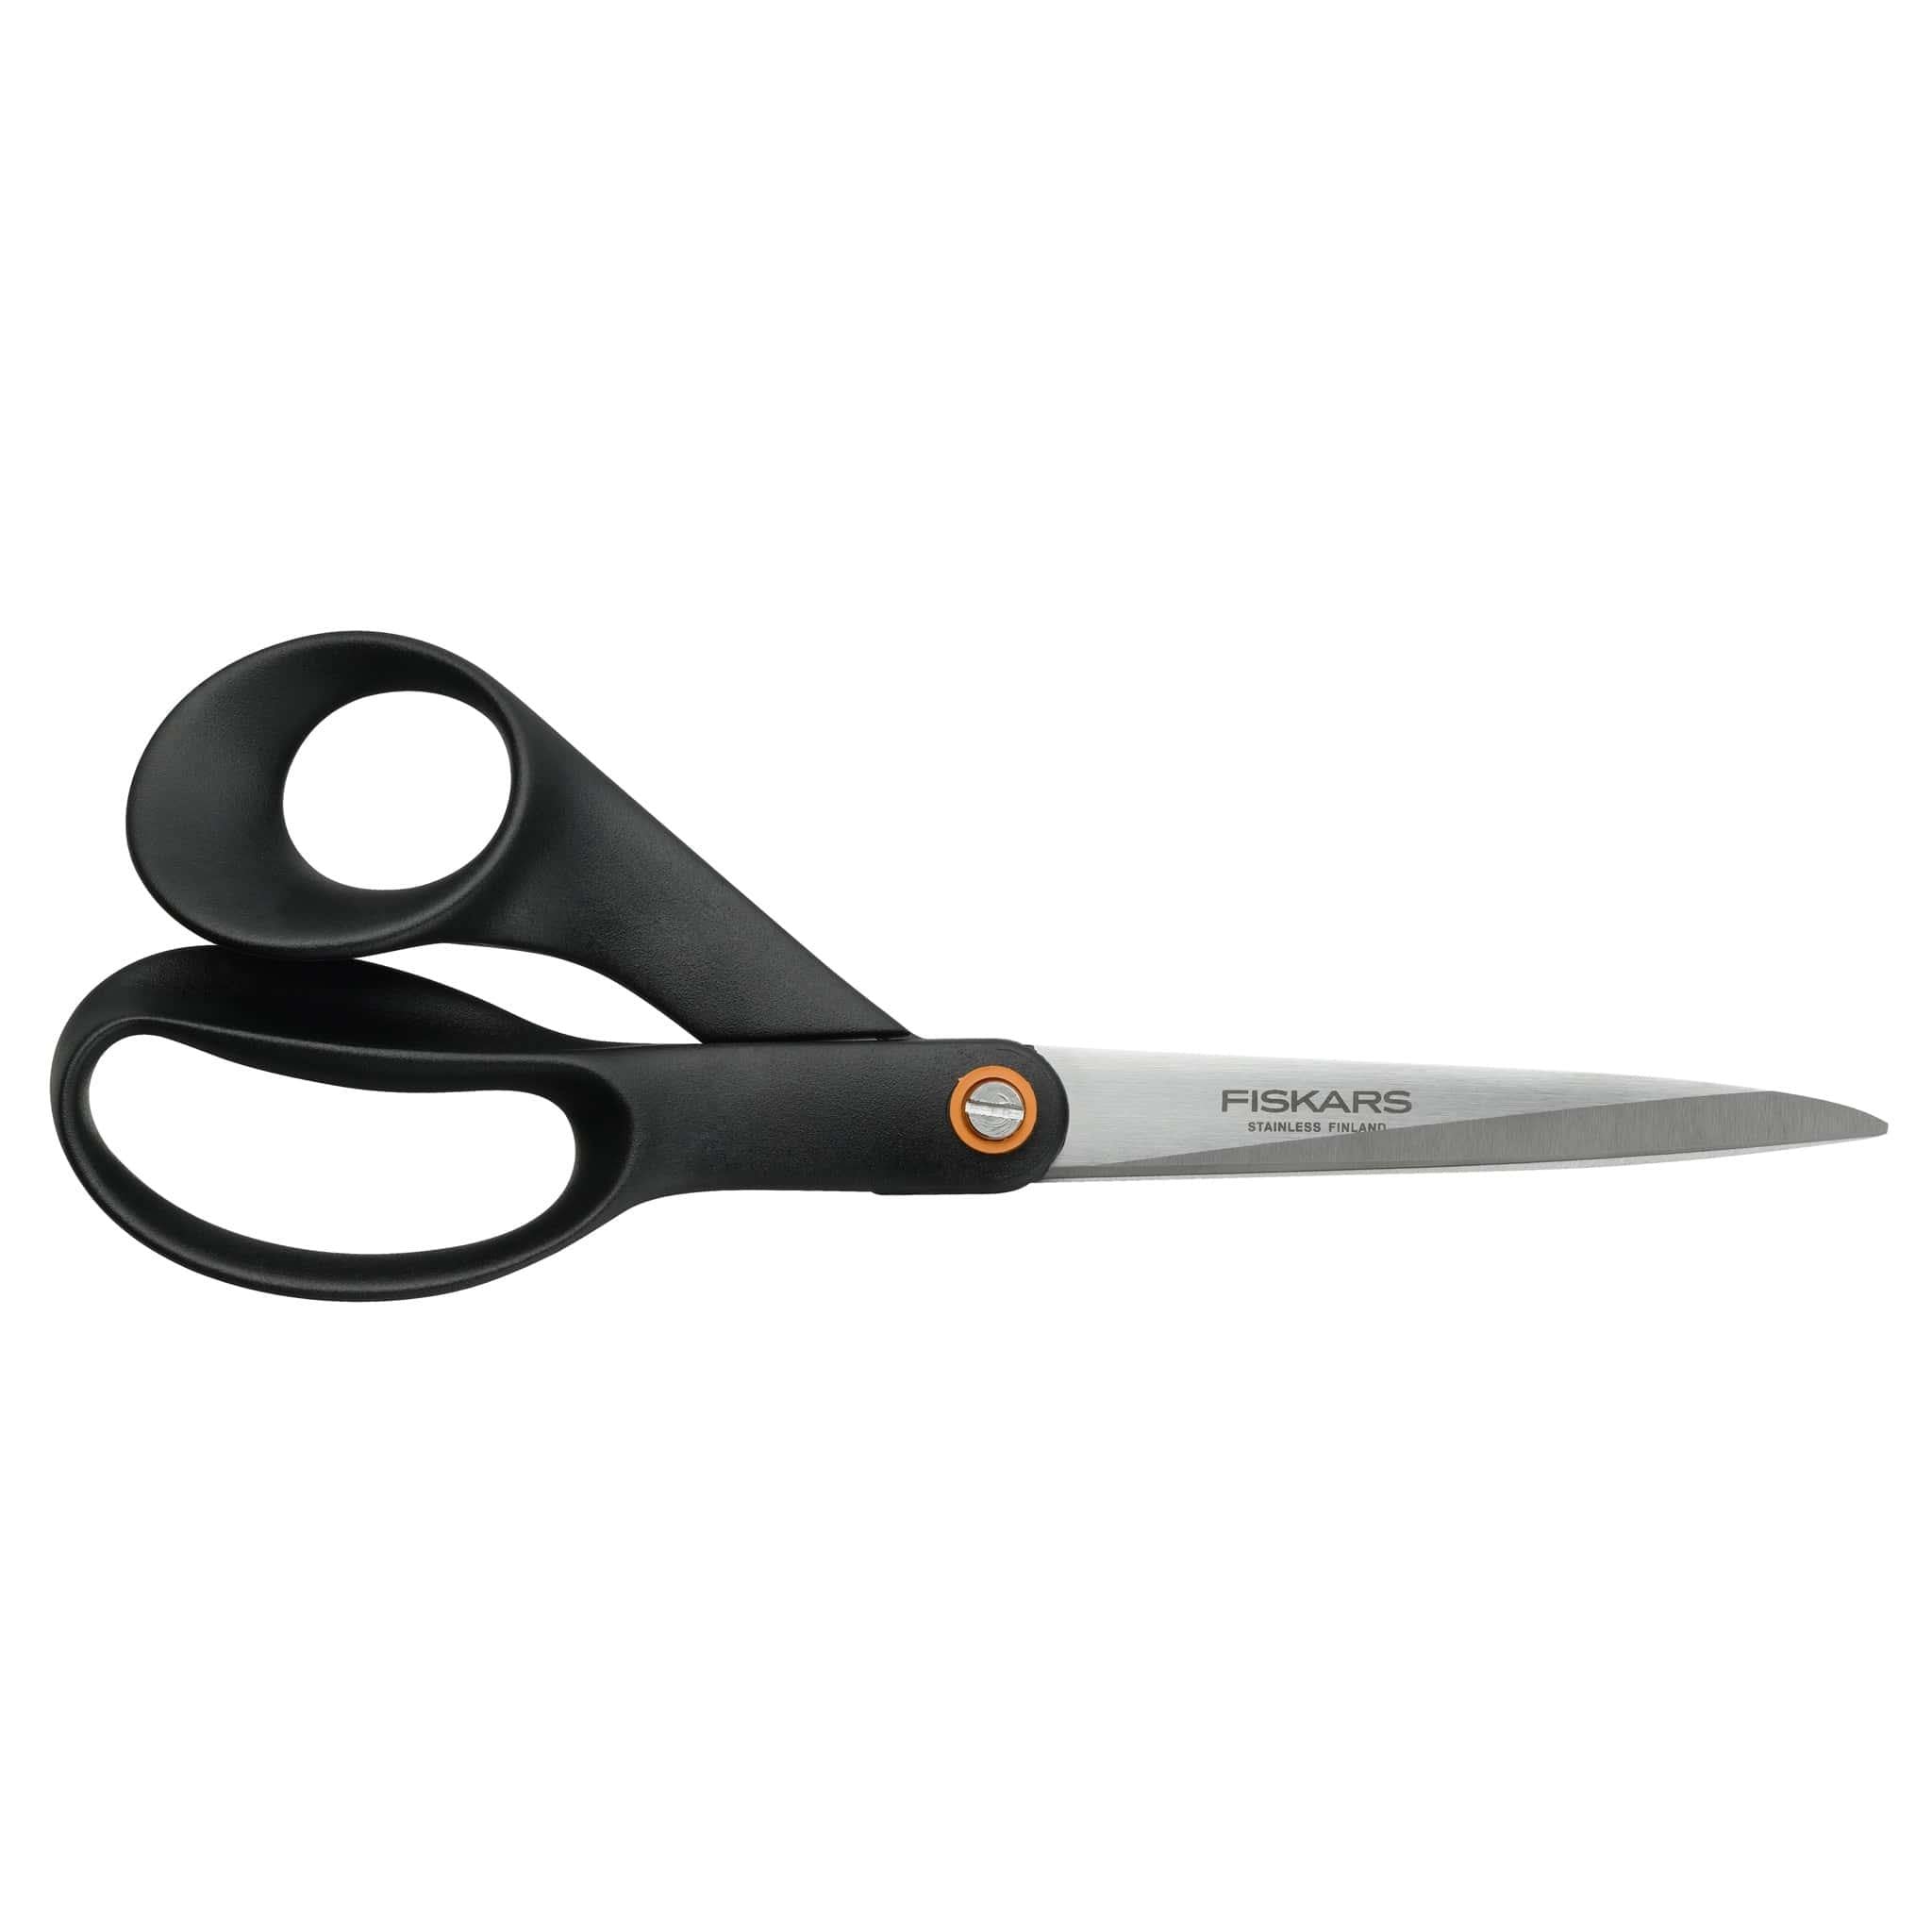 Fiskars Functional Form General Purpose Scissors Black (24cm/9.5in)